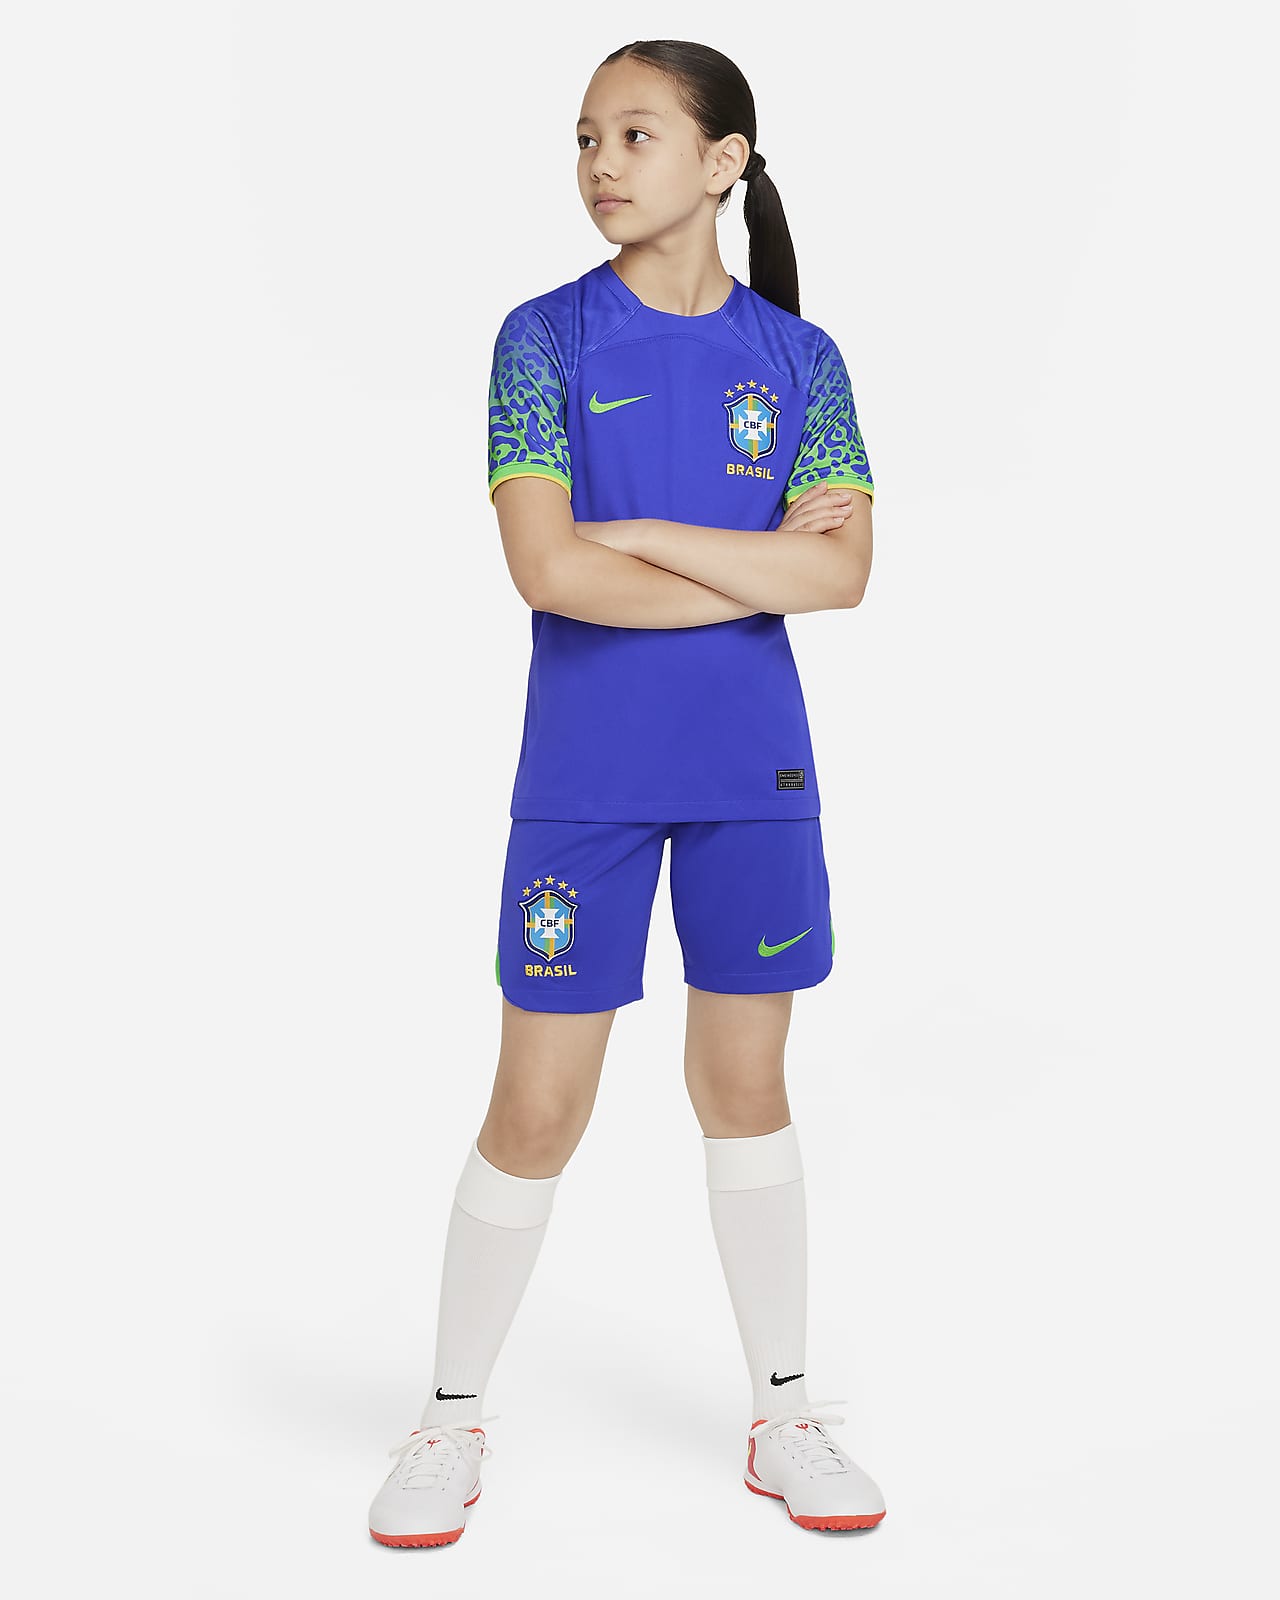 Brazil Nike Black Dri-Fit Training Football Shirt / Jersey - S – Rokit